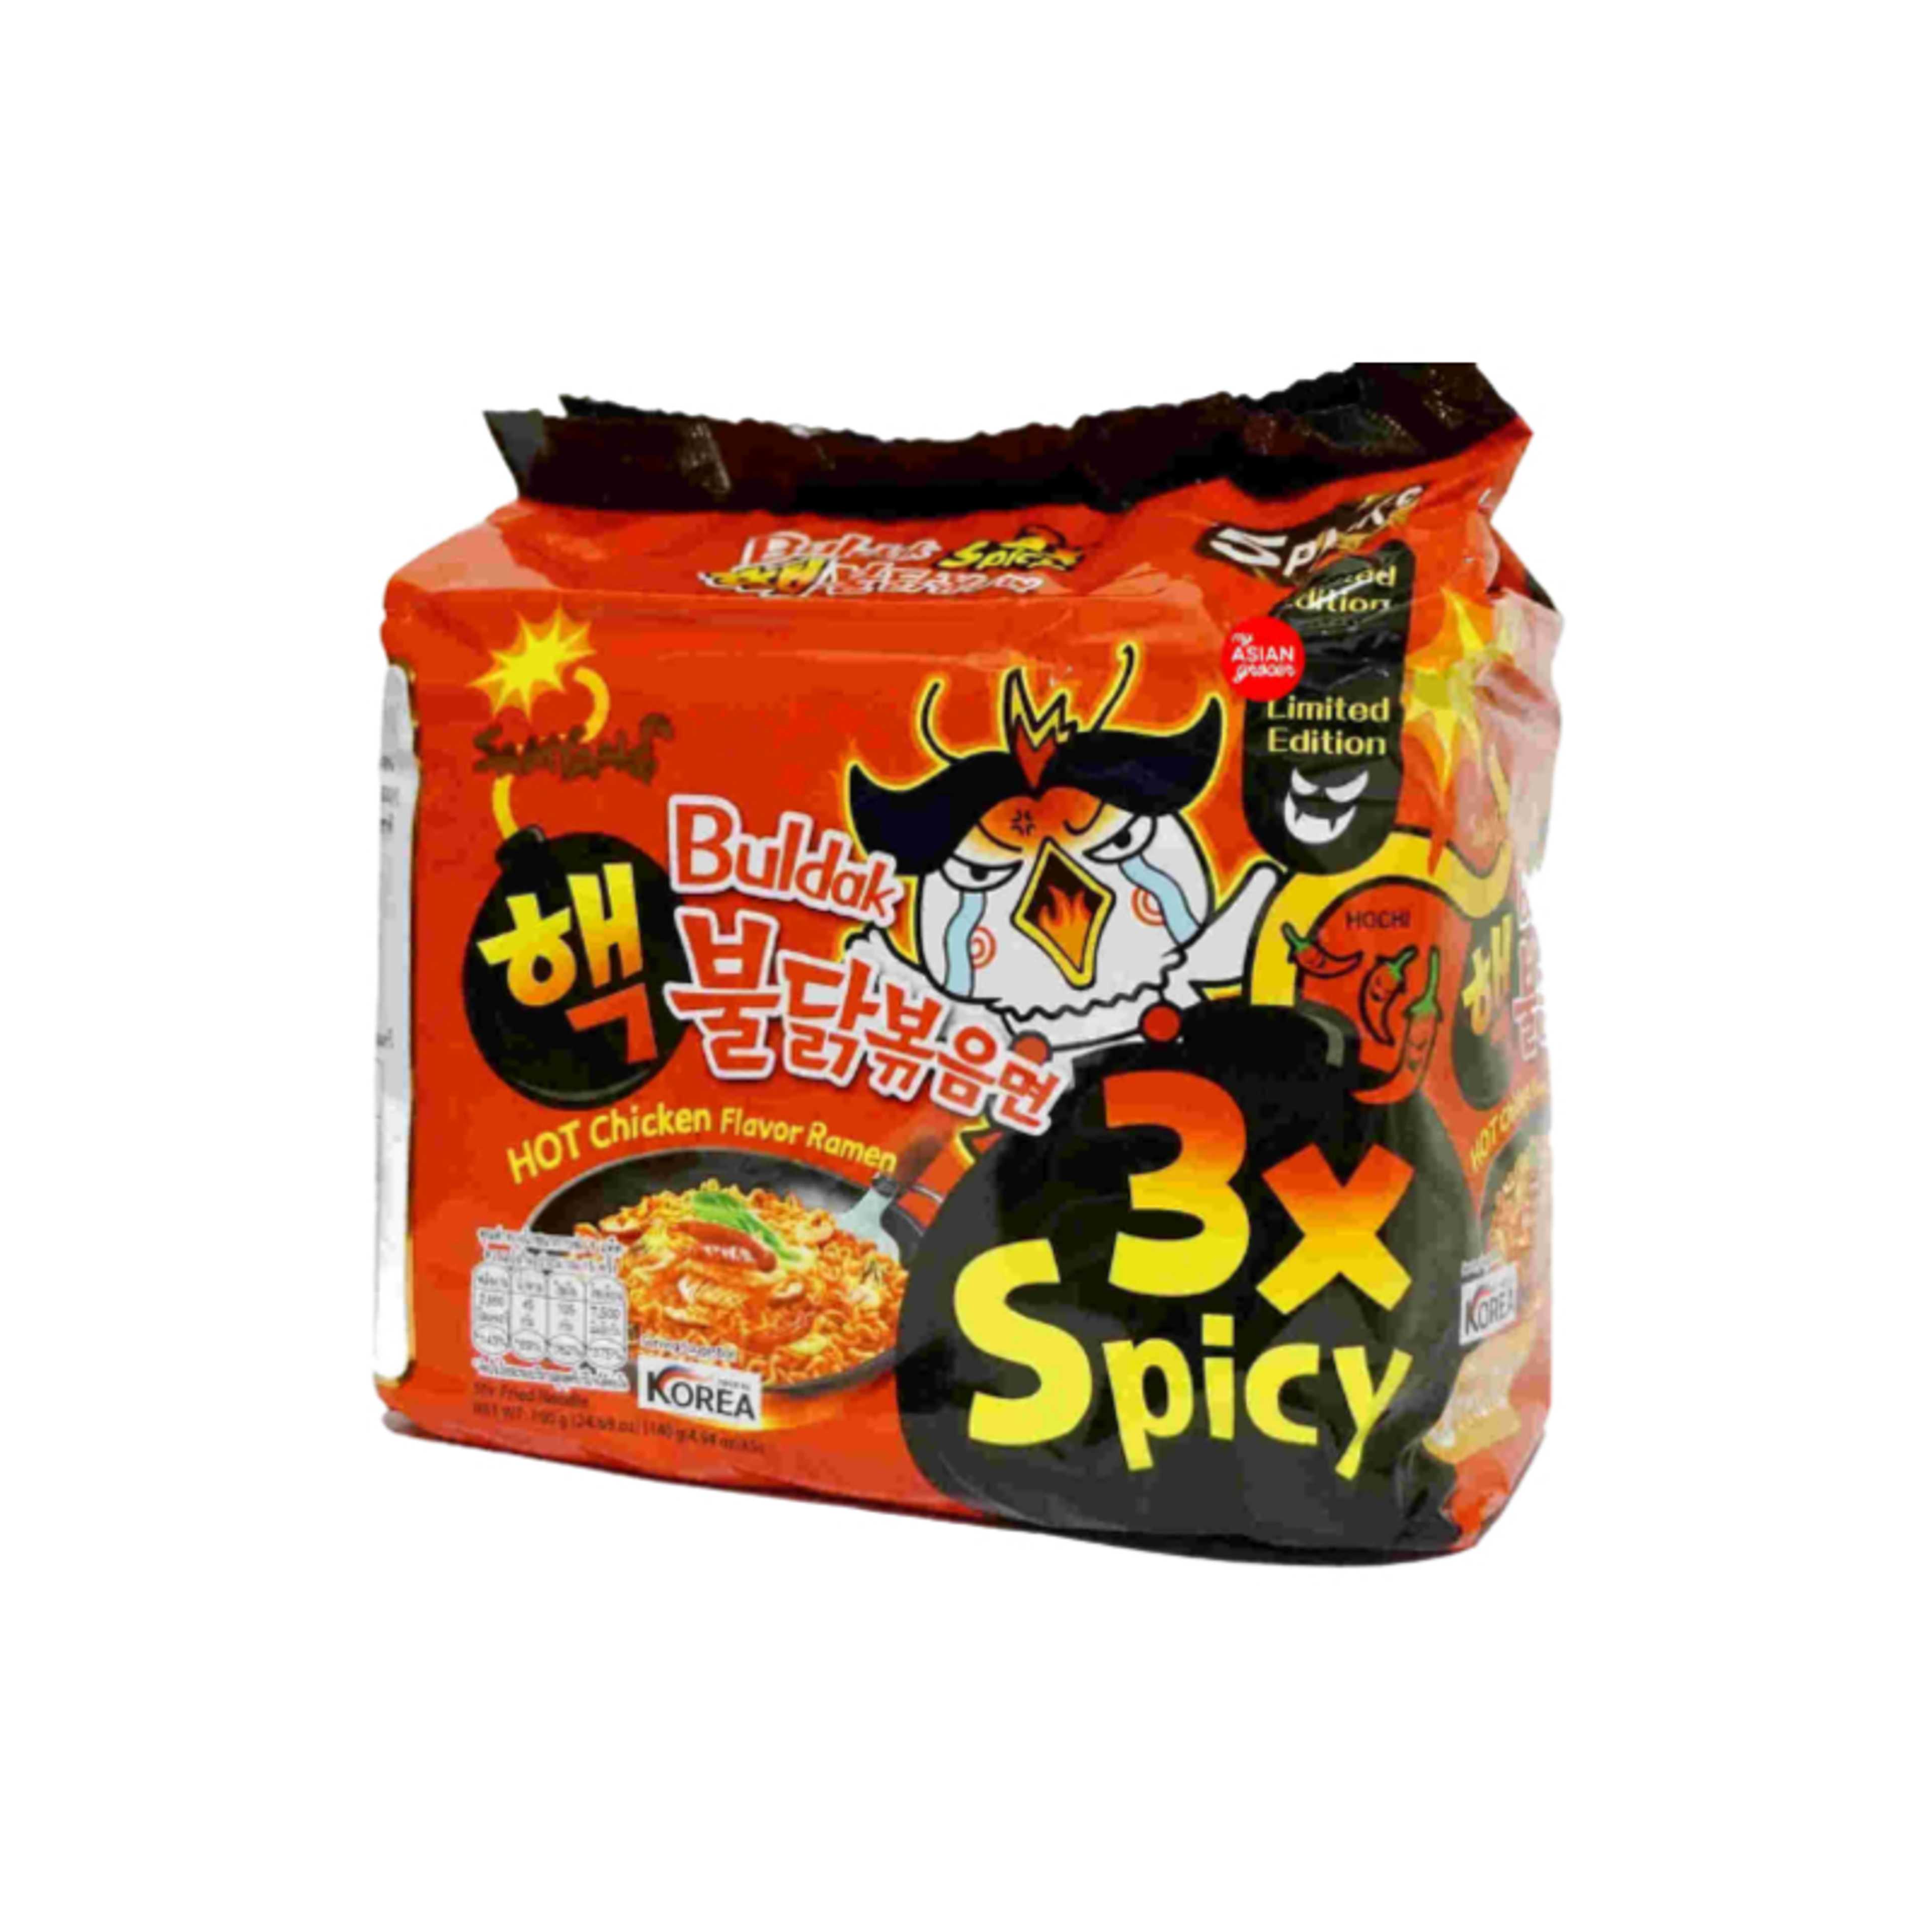 Samyangs Noodles 3X Spicy Hot Chicken Flavor Ramen Family Pack